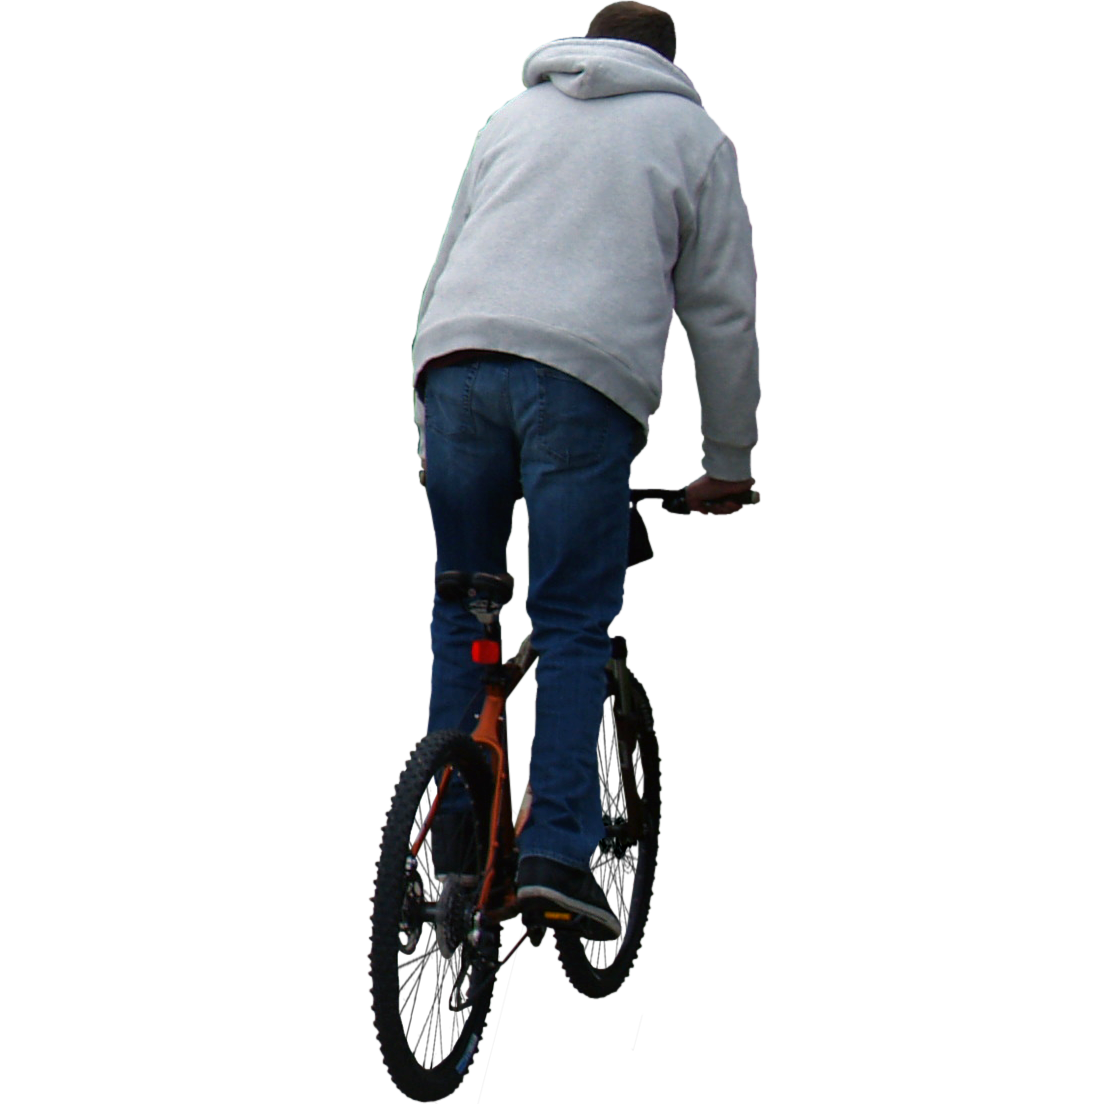 Children Riding Bikes PNG - 137948